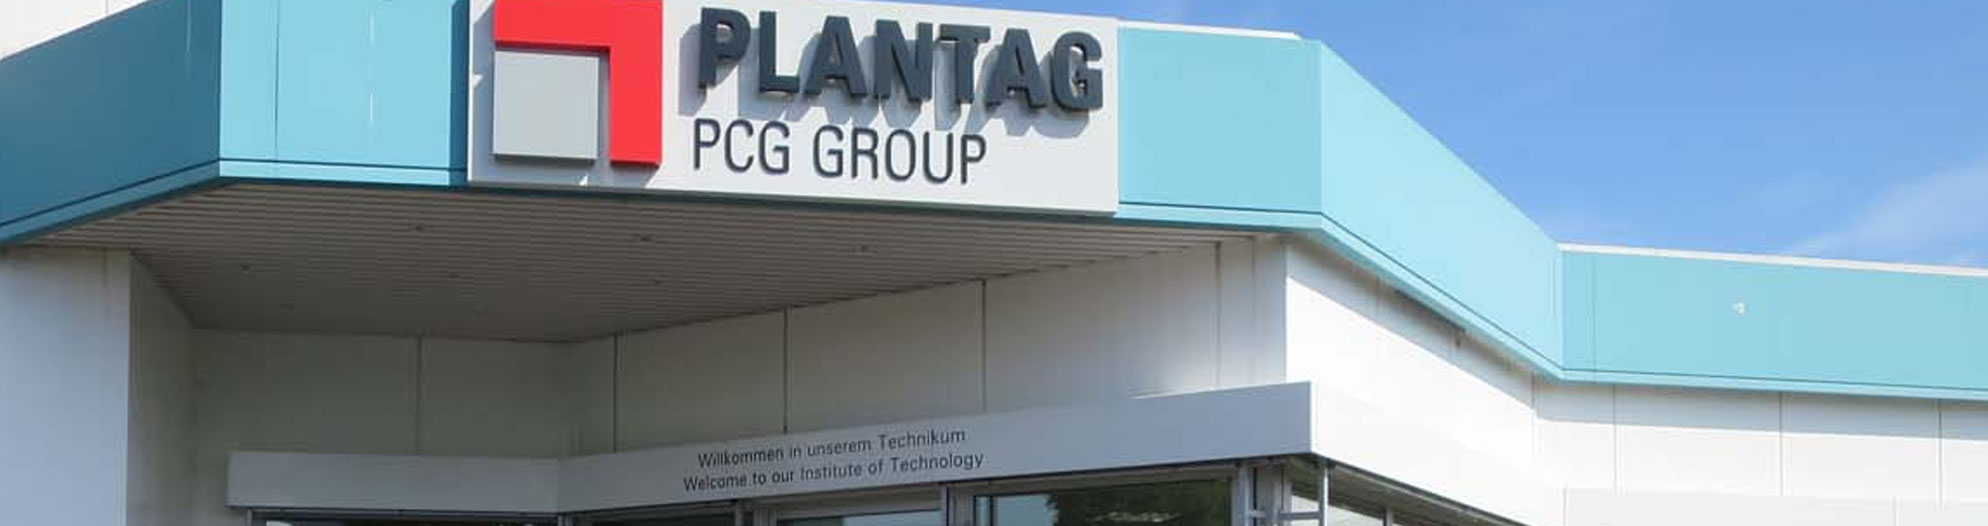 <h2>Plantag Coatings GmbH</h2>